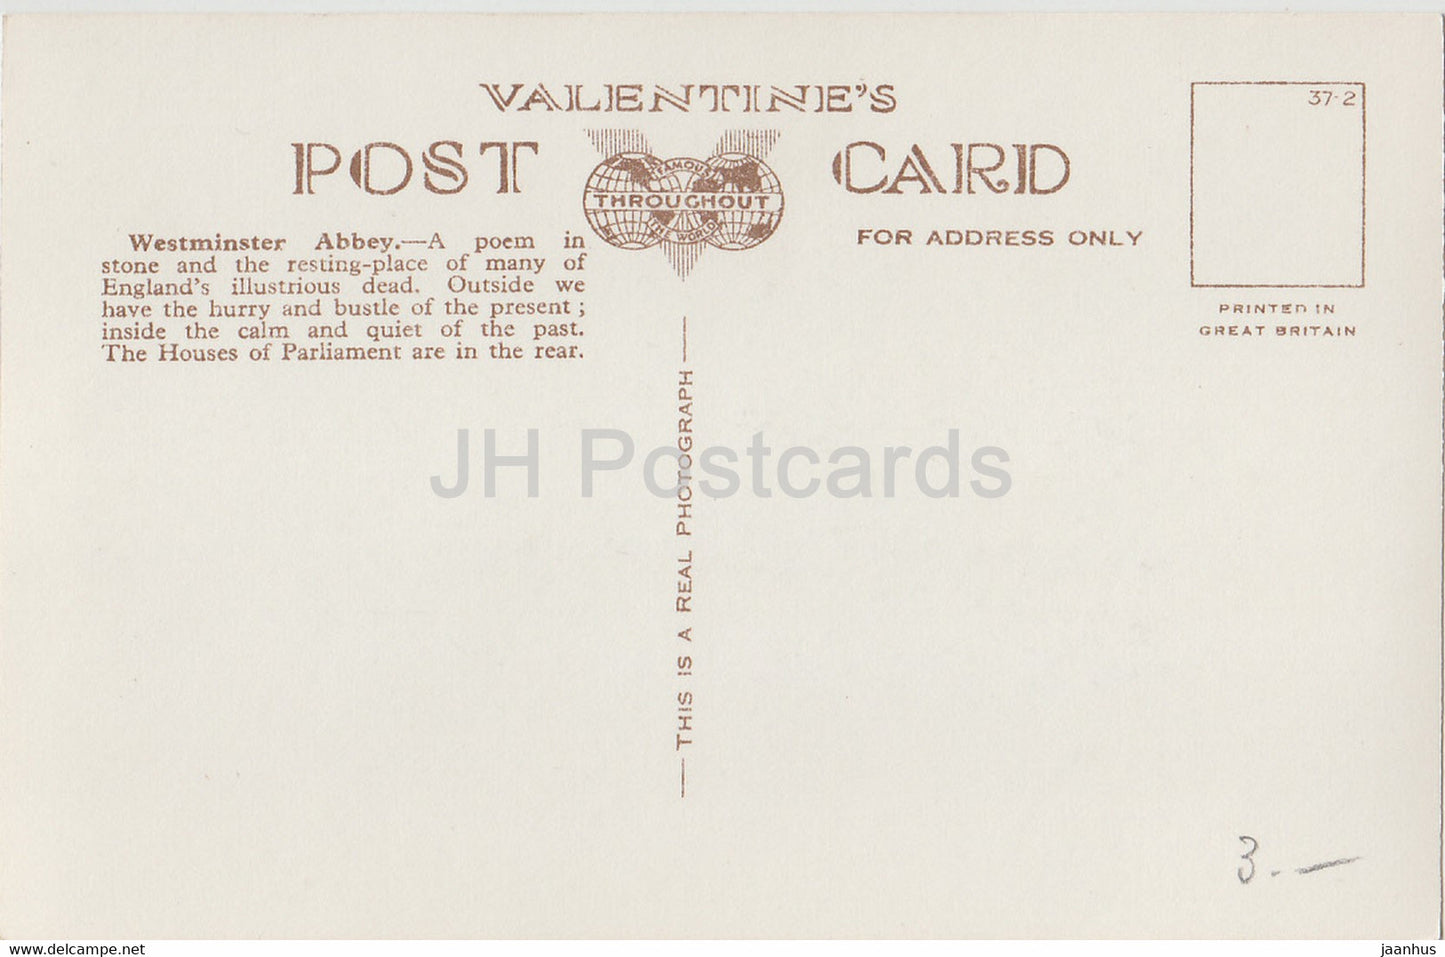 London - West Towers - Westminster Abbey - 209360 - Valentine - old postcard - England - United Kingdom - unused